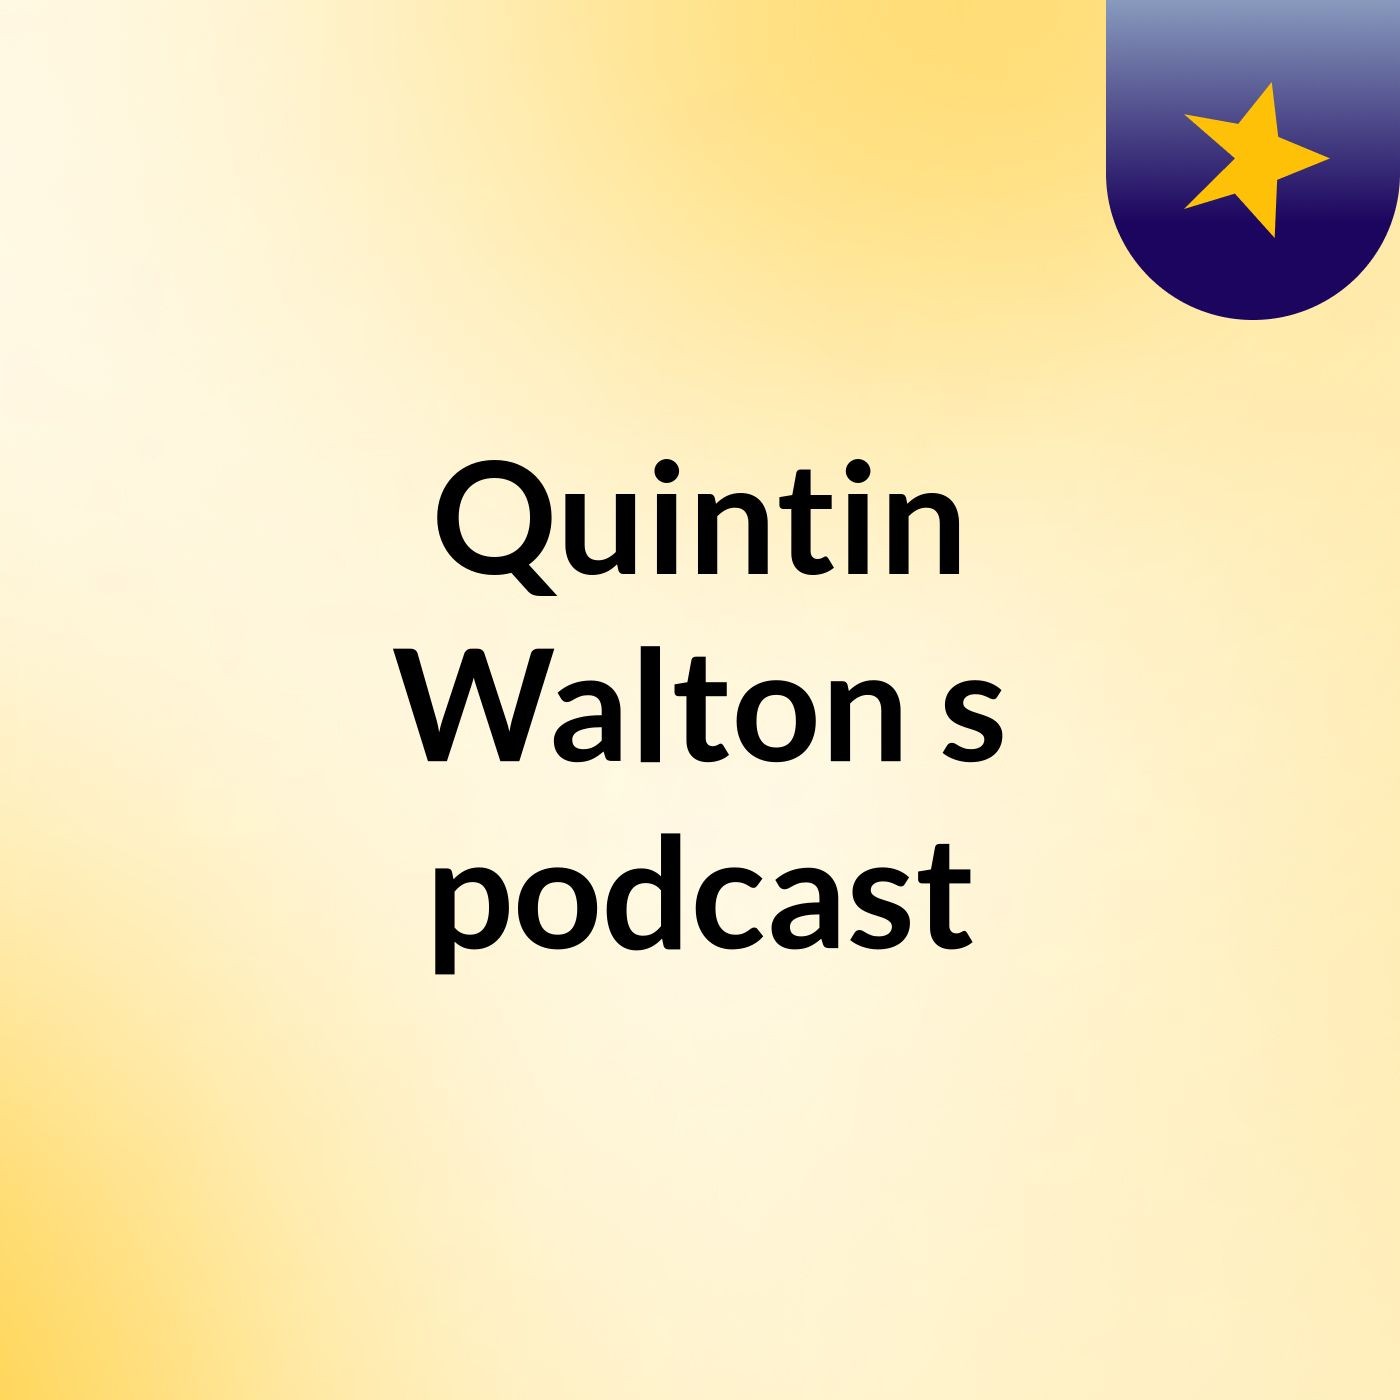 Quintin Walton's podcast